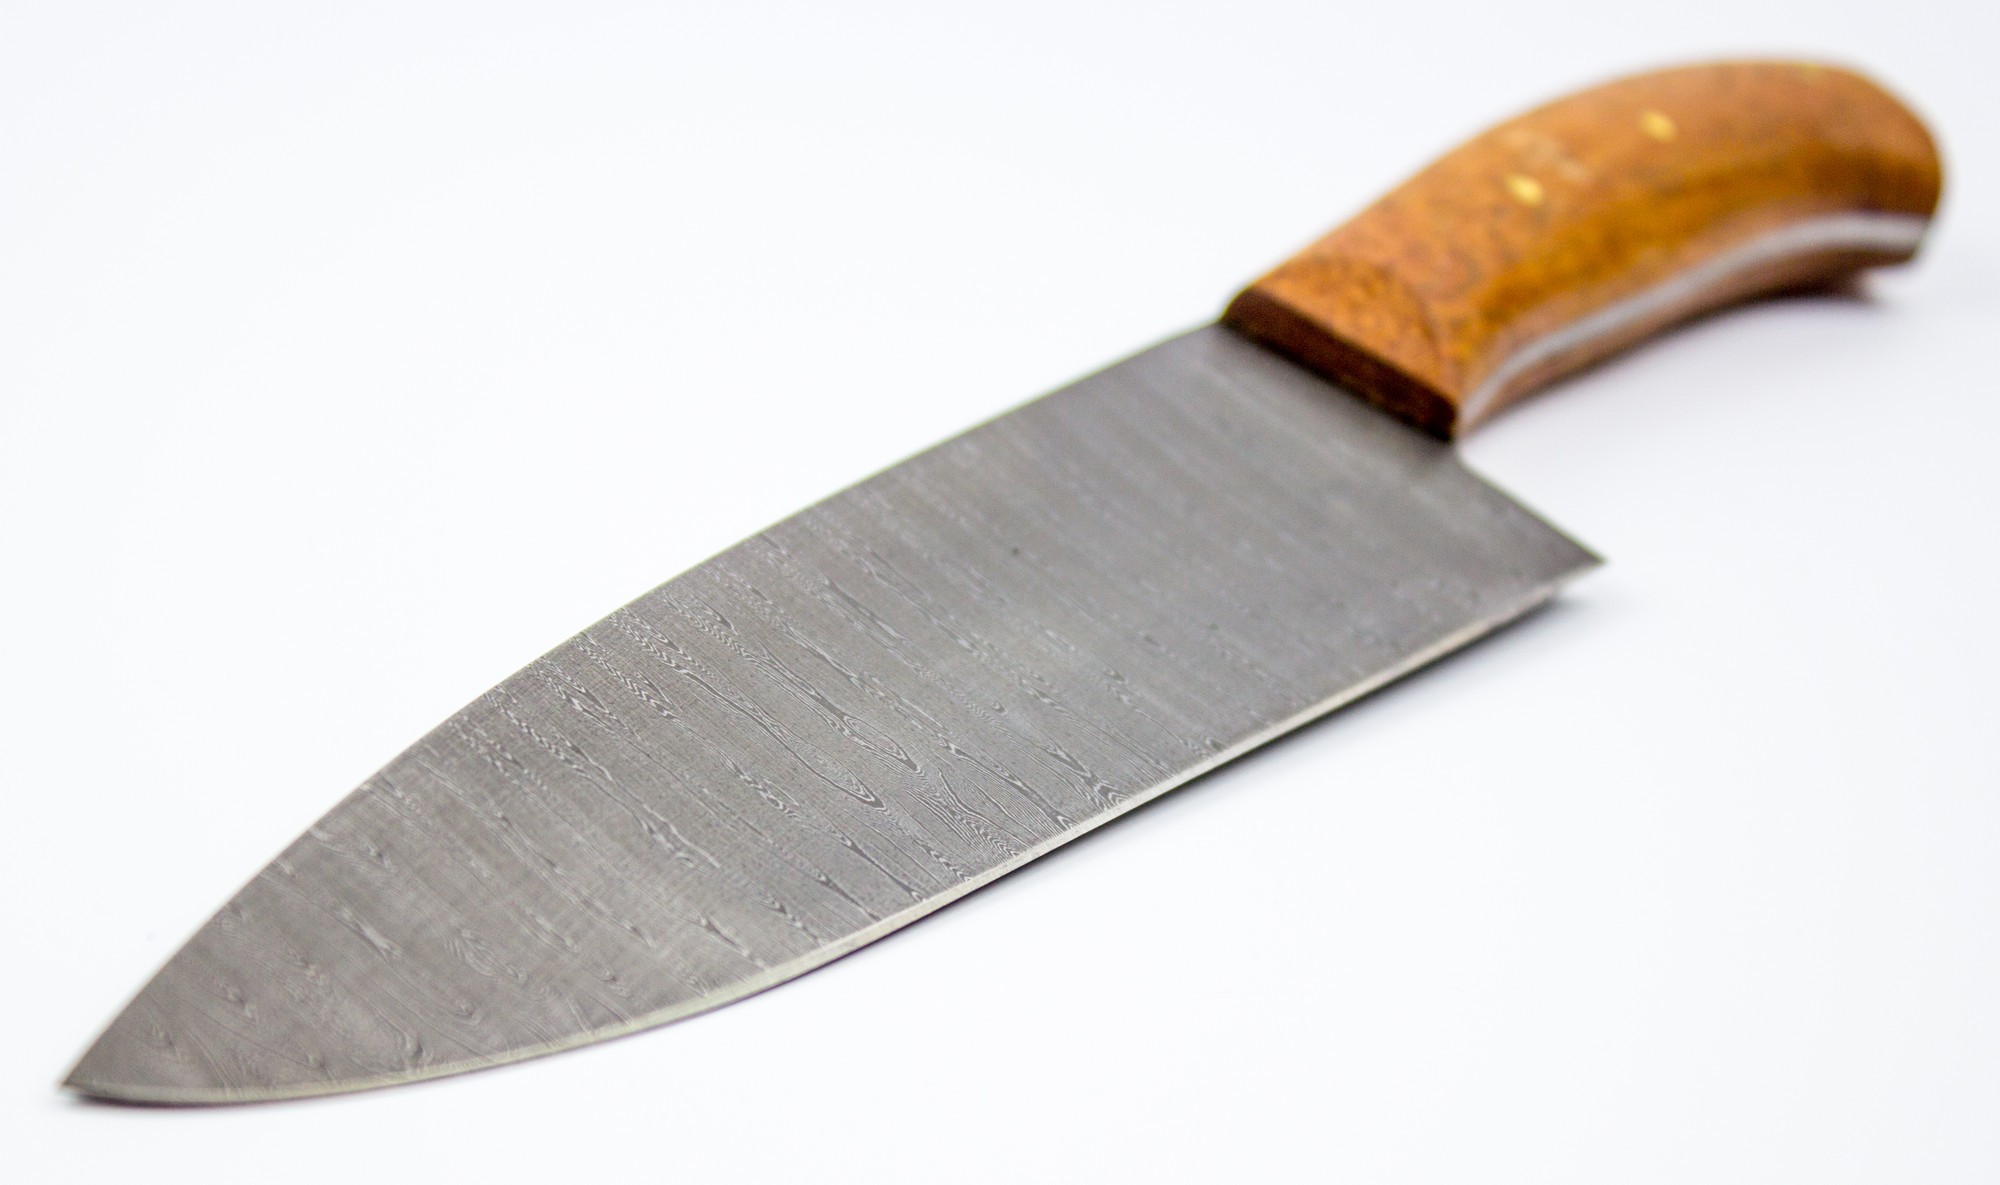 Широкий нож 6 букв. Кухонный нож Ontario nozhikov. Нож кухонный 20см 38458 Эстет. Нож с широким лезвием. Кухонный нож с широким лезвием.